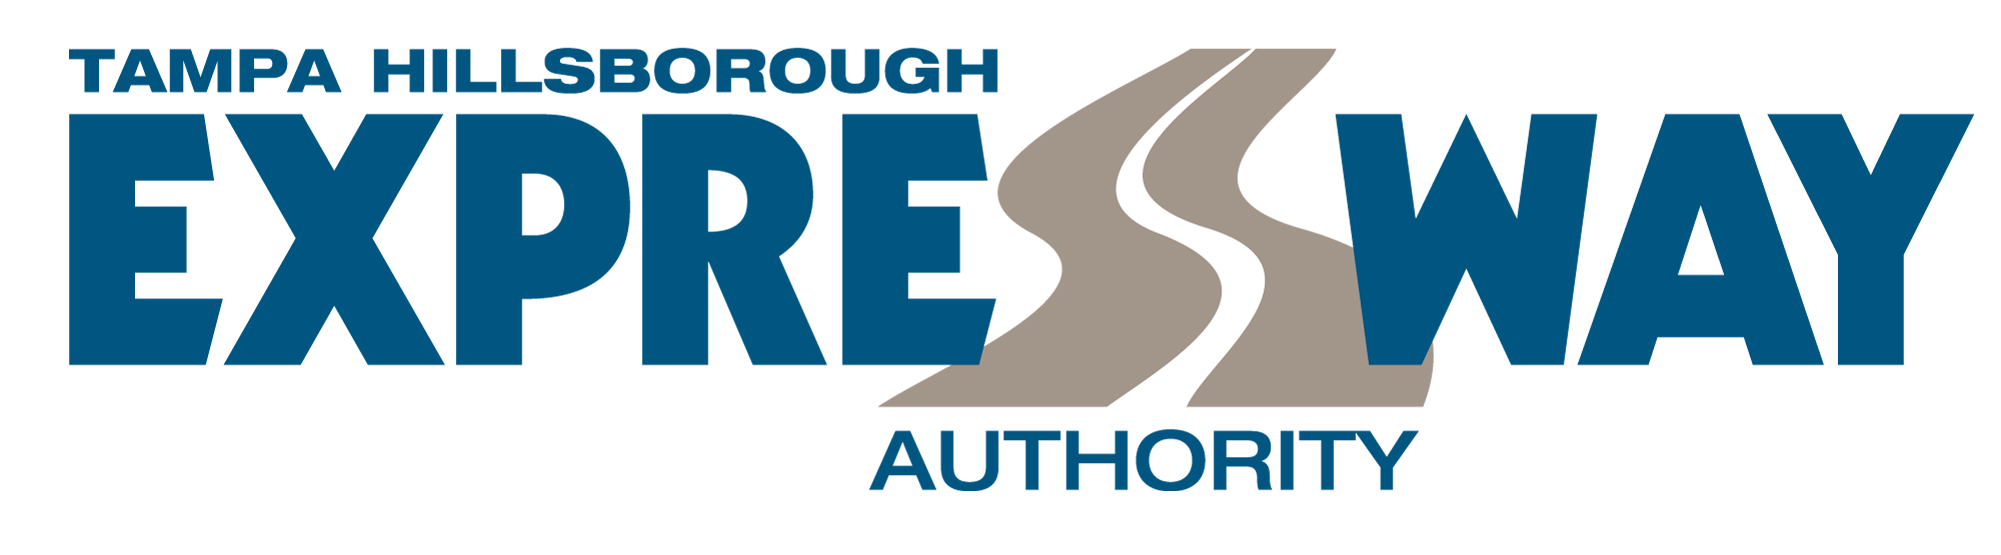 Tampa Hillsborough Expressway Authority Logo